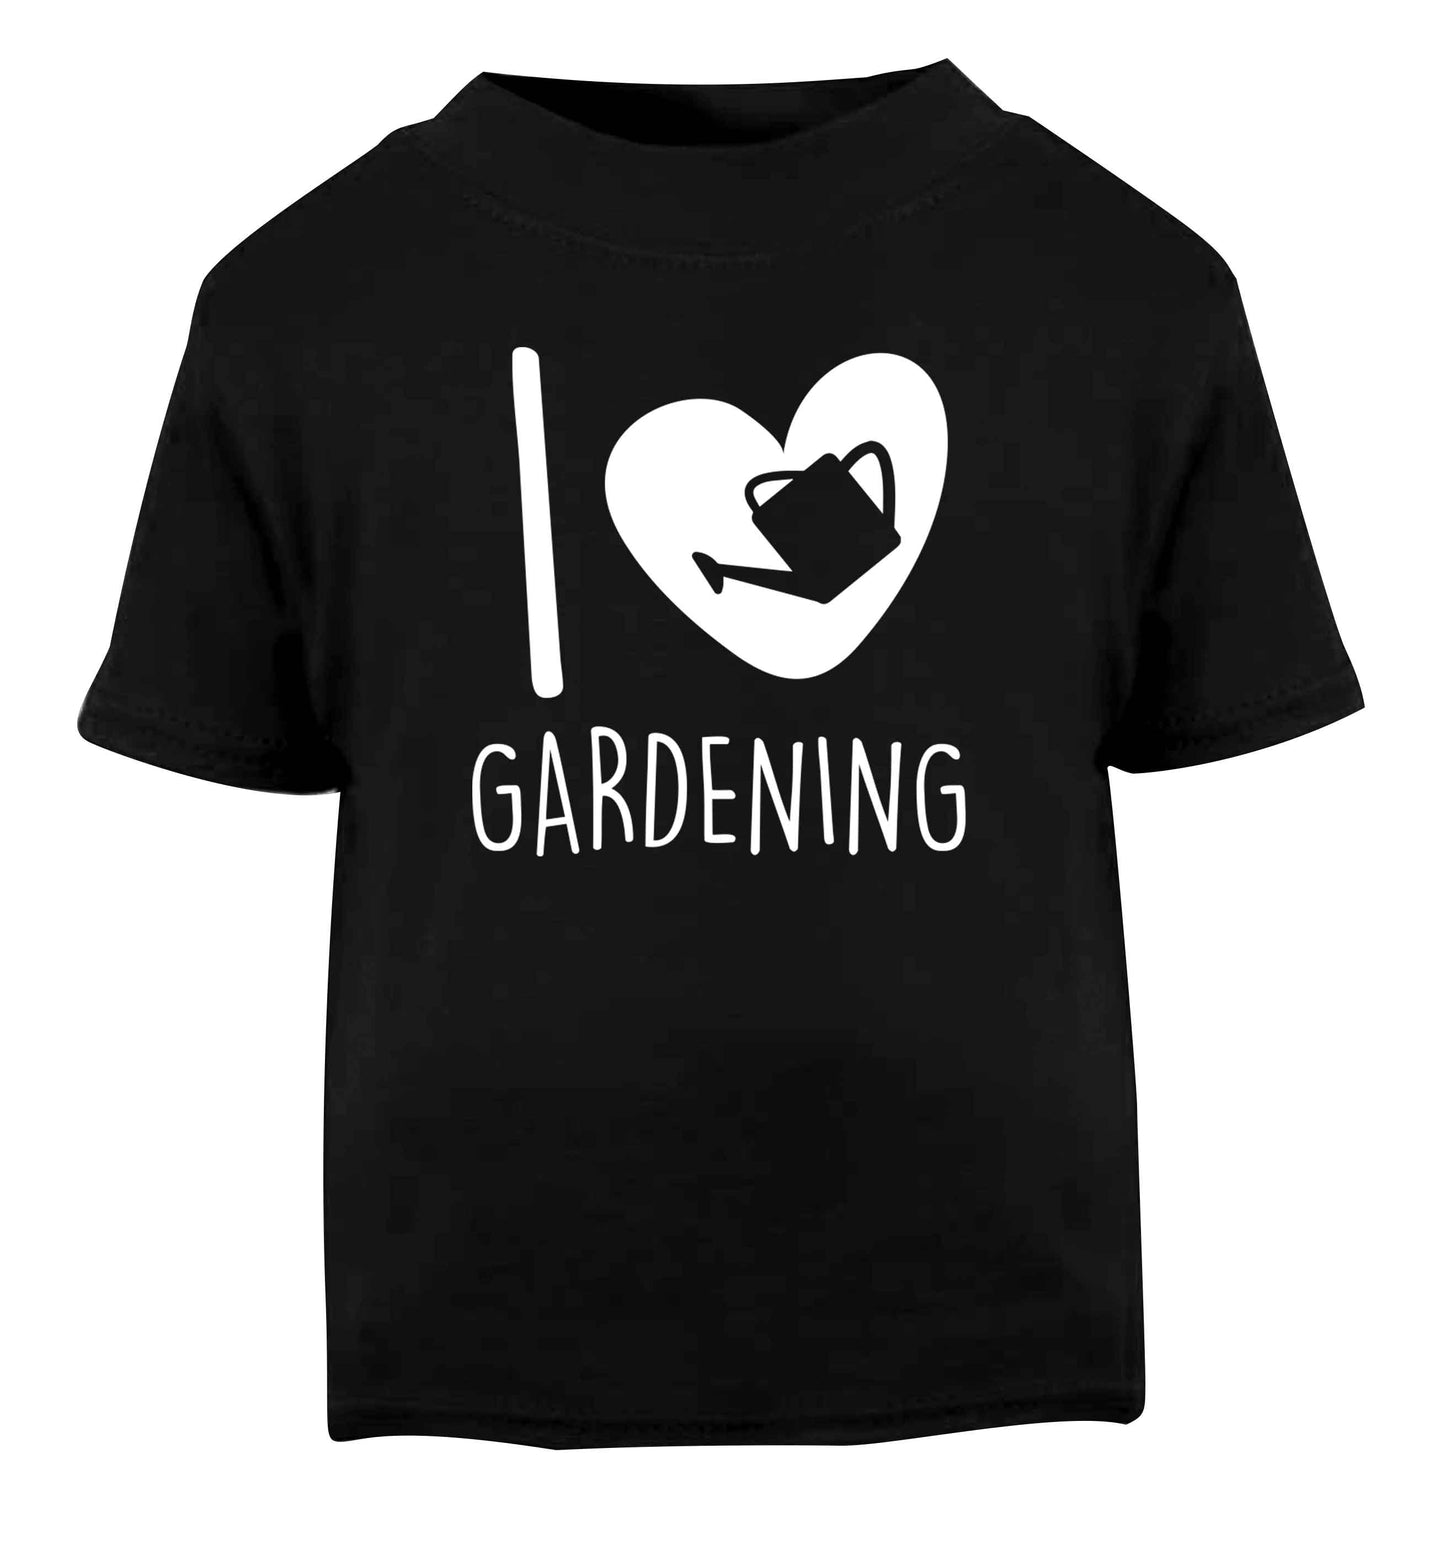 I love gardening Black Baby Toddler Tshirt 2 years